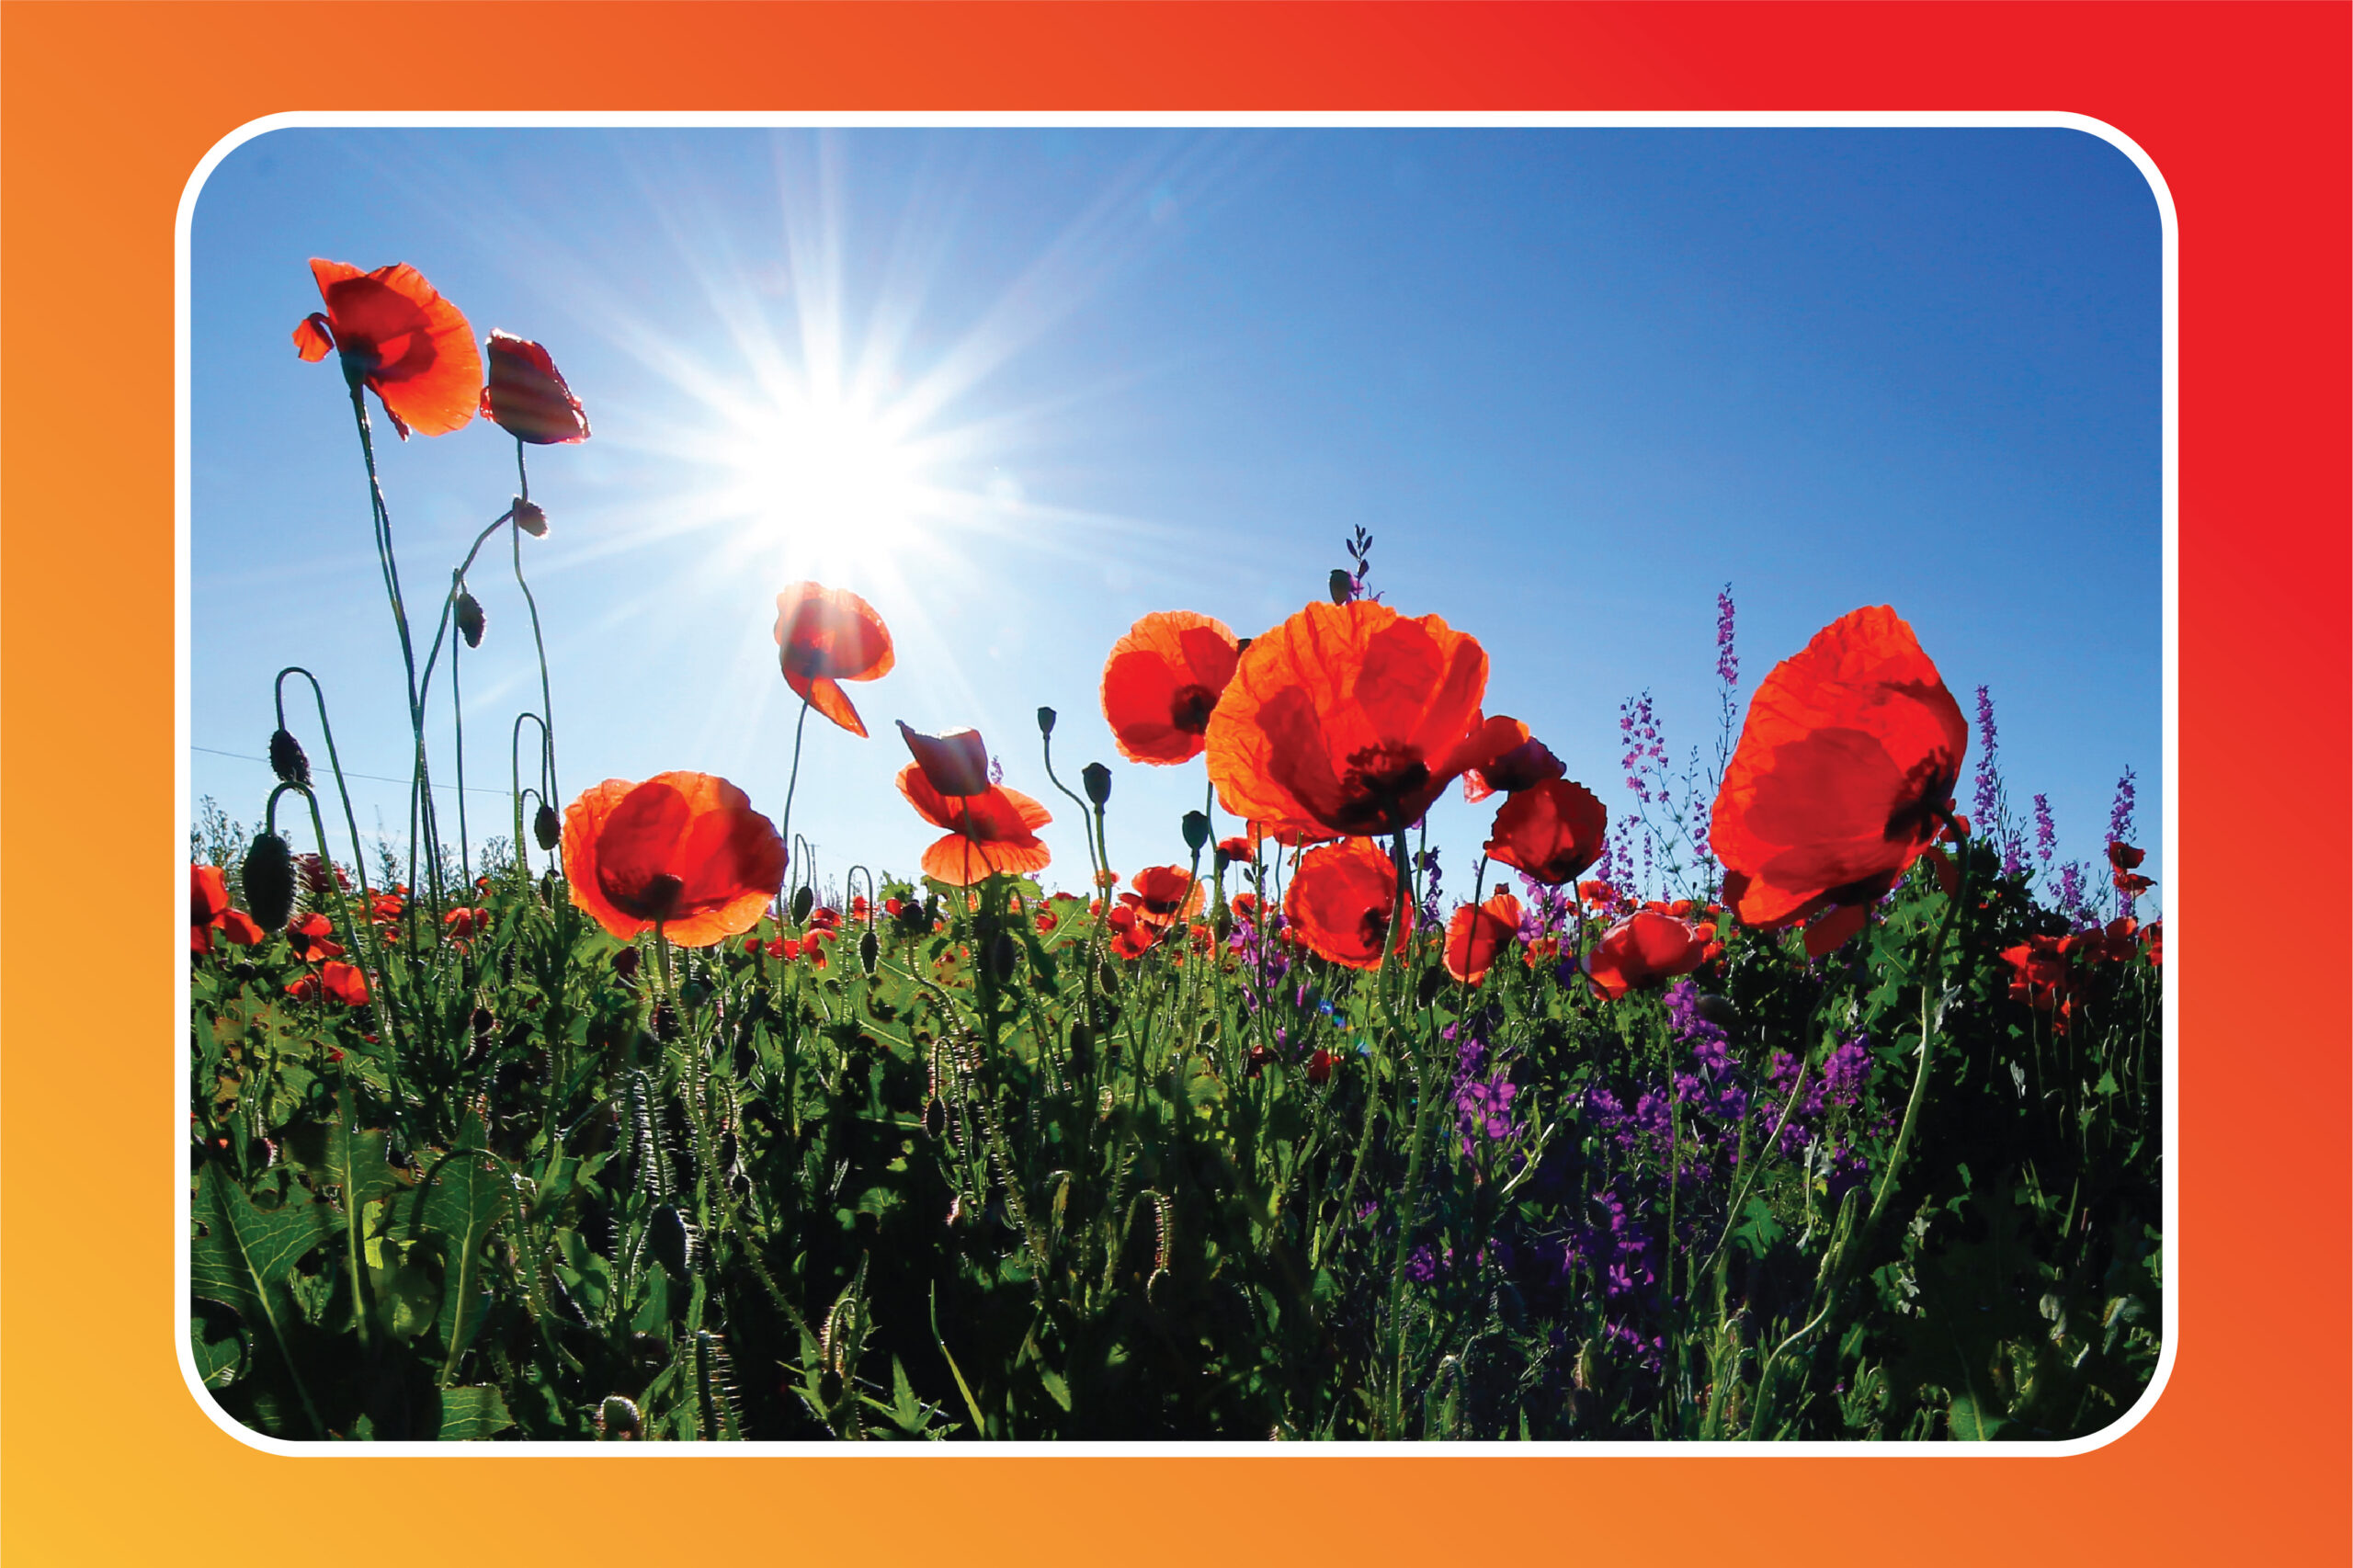 Sejarah di Balik Bunga Poppy: Simbol Penghormatan Para Prajurit yang Gugur dalam Perang